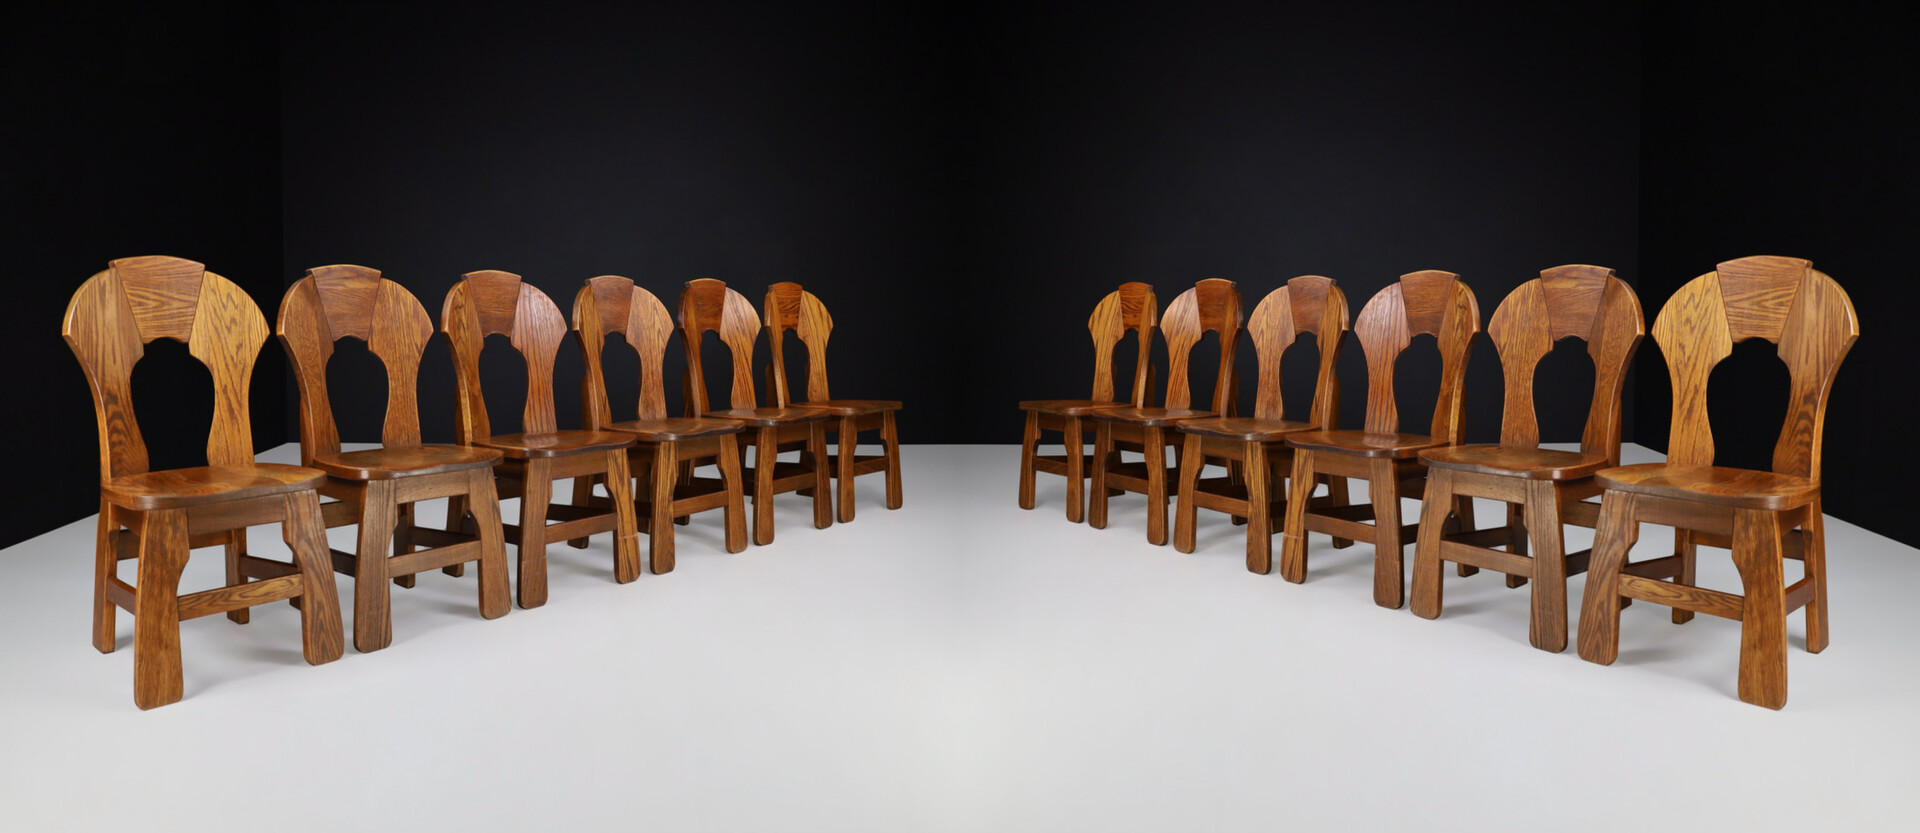 Brutalist Oak dining chairs, belgium 1970s Late-20th century